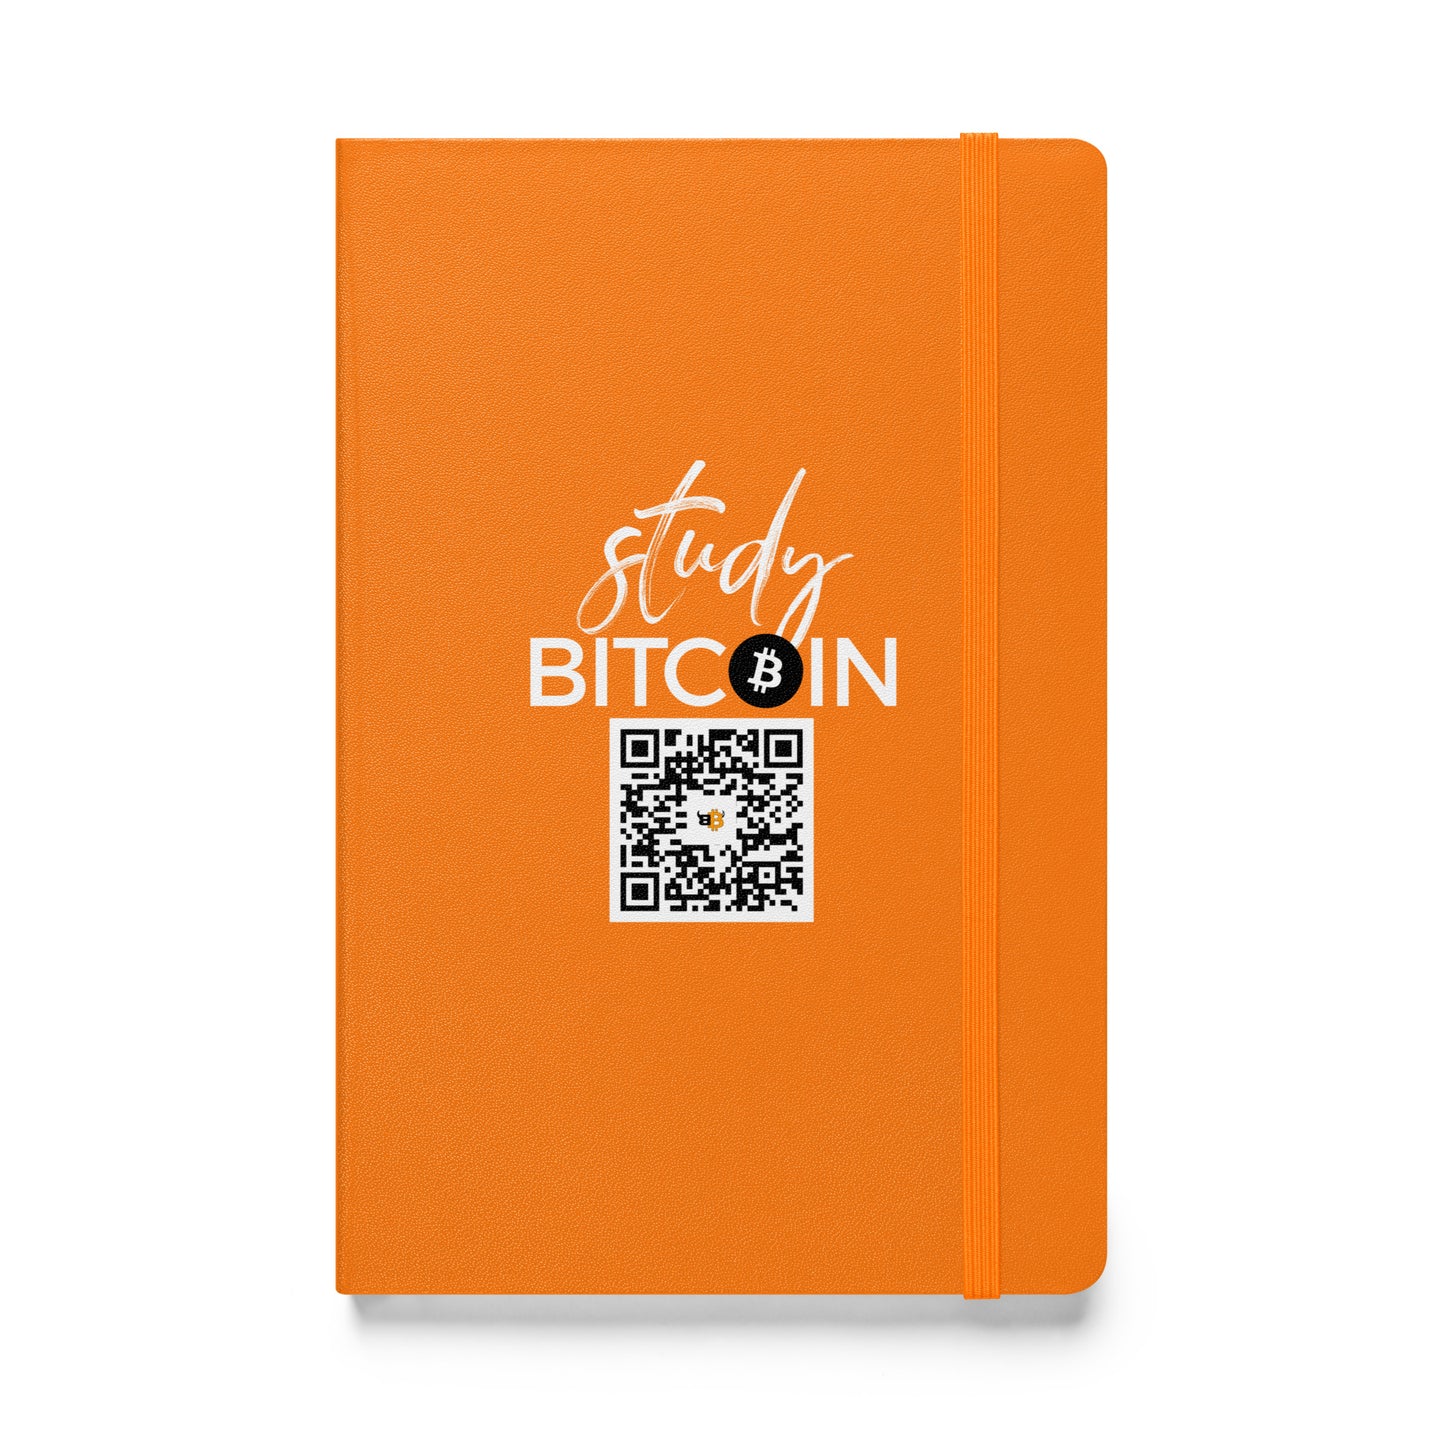 Study Bitcoin Hardcover Bound Notebook